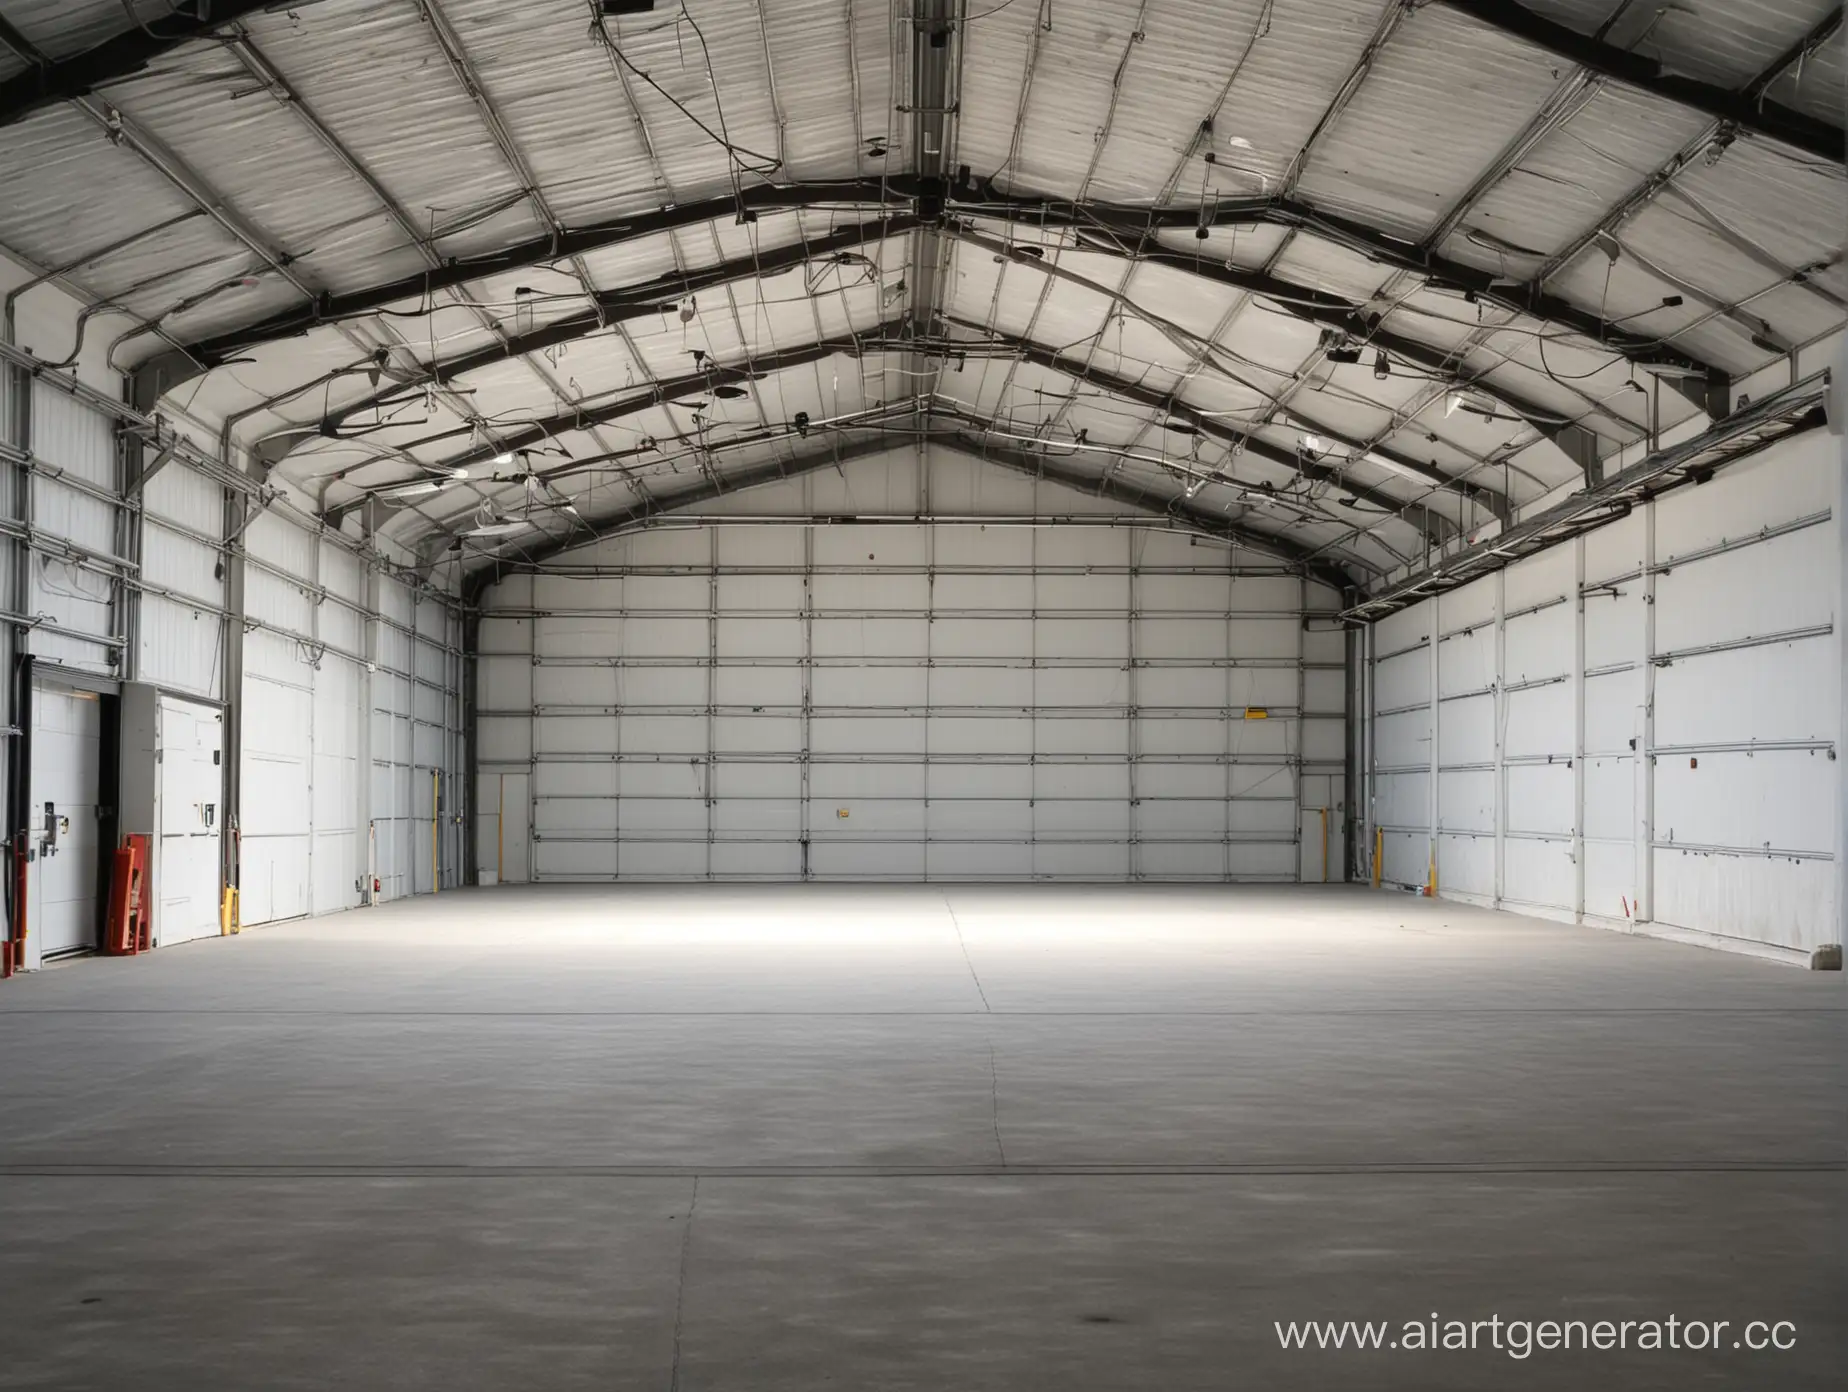 Bright-Hangar-Interior-with-Empty-Space